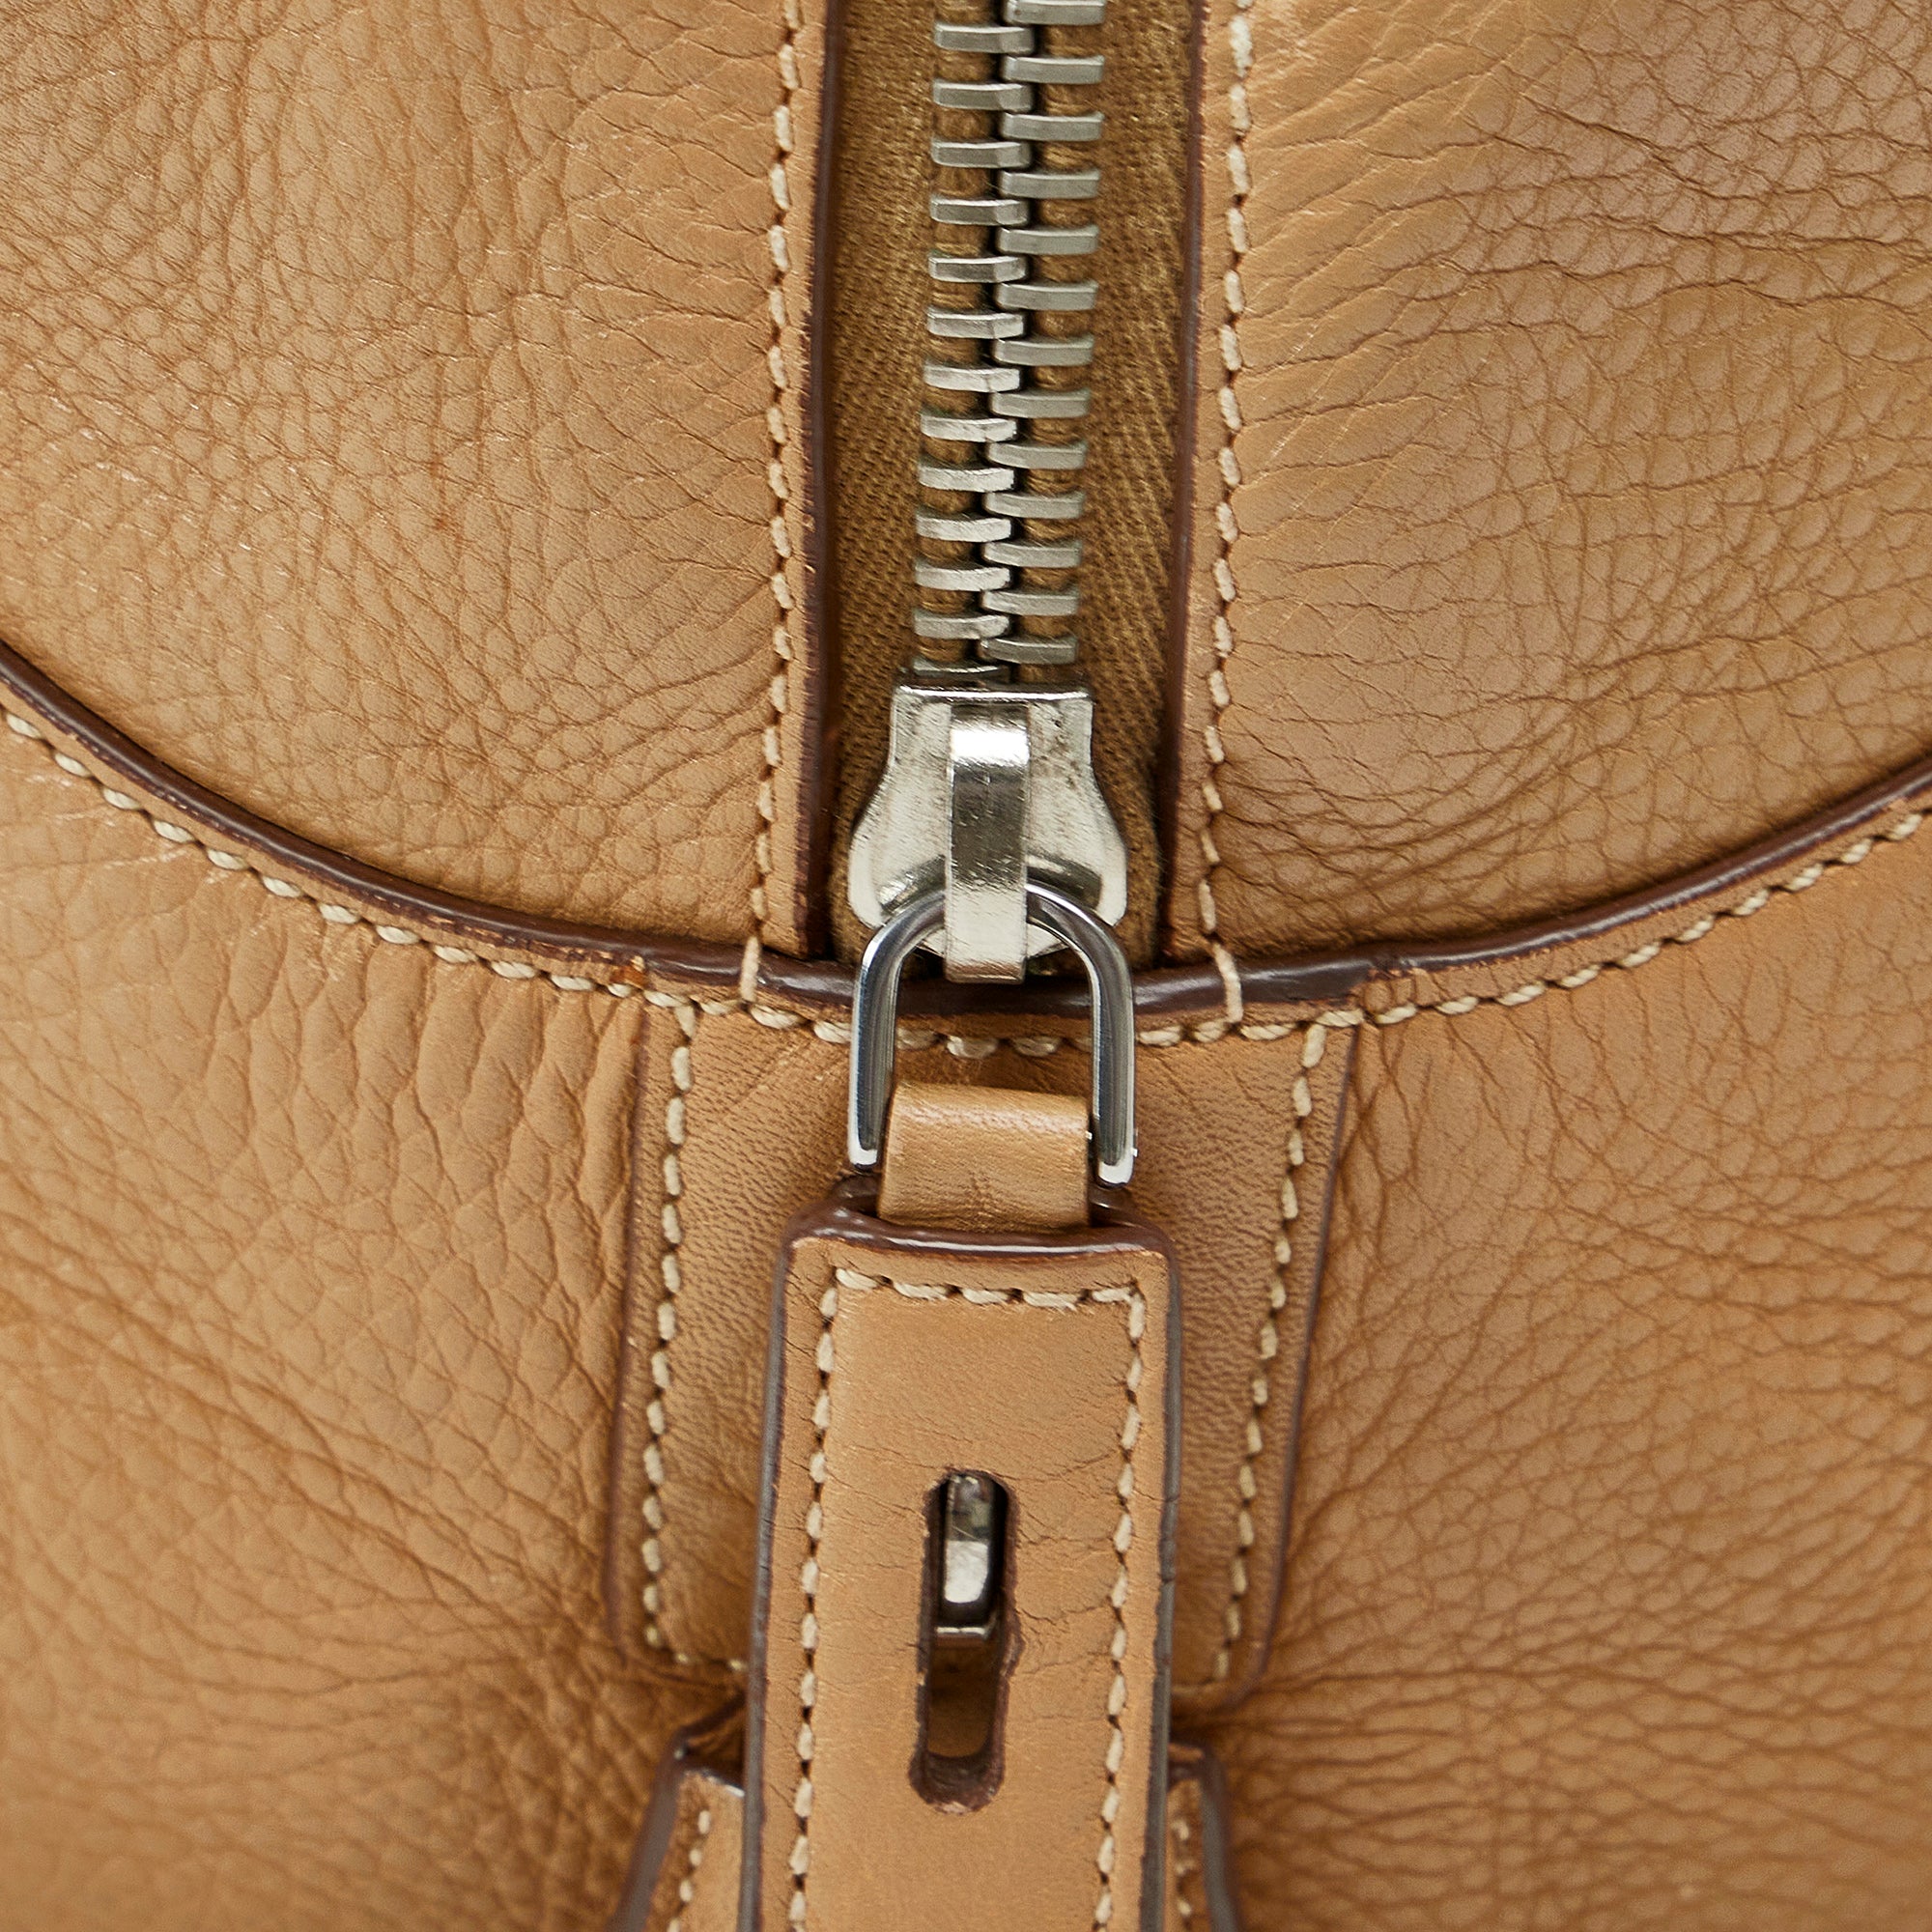 Prada Vitello Daino Brown Leather Shoulder Bag -  Sweden